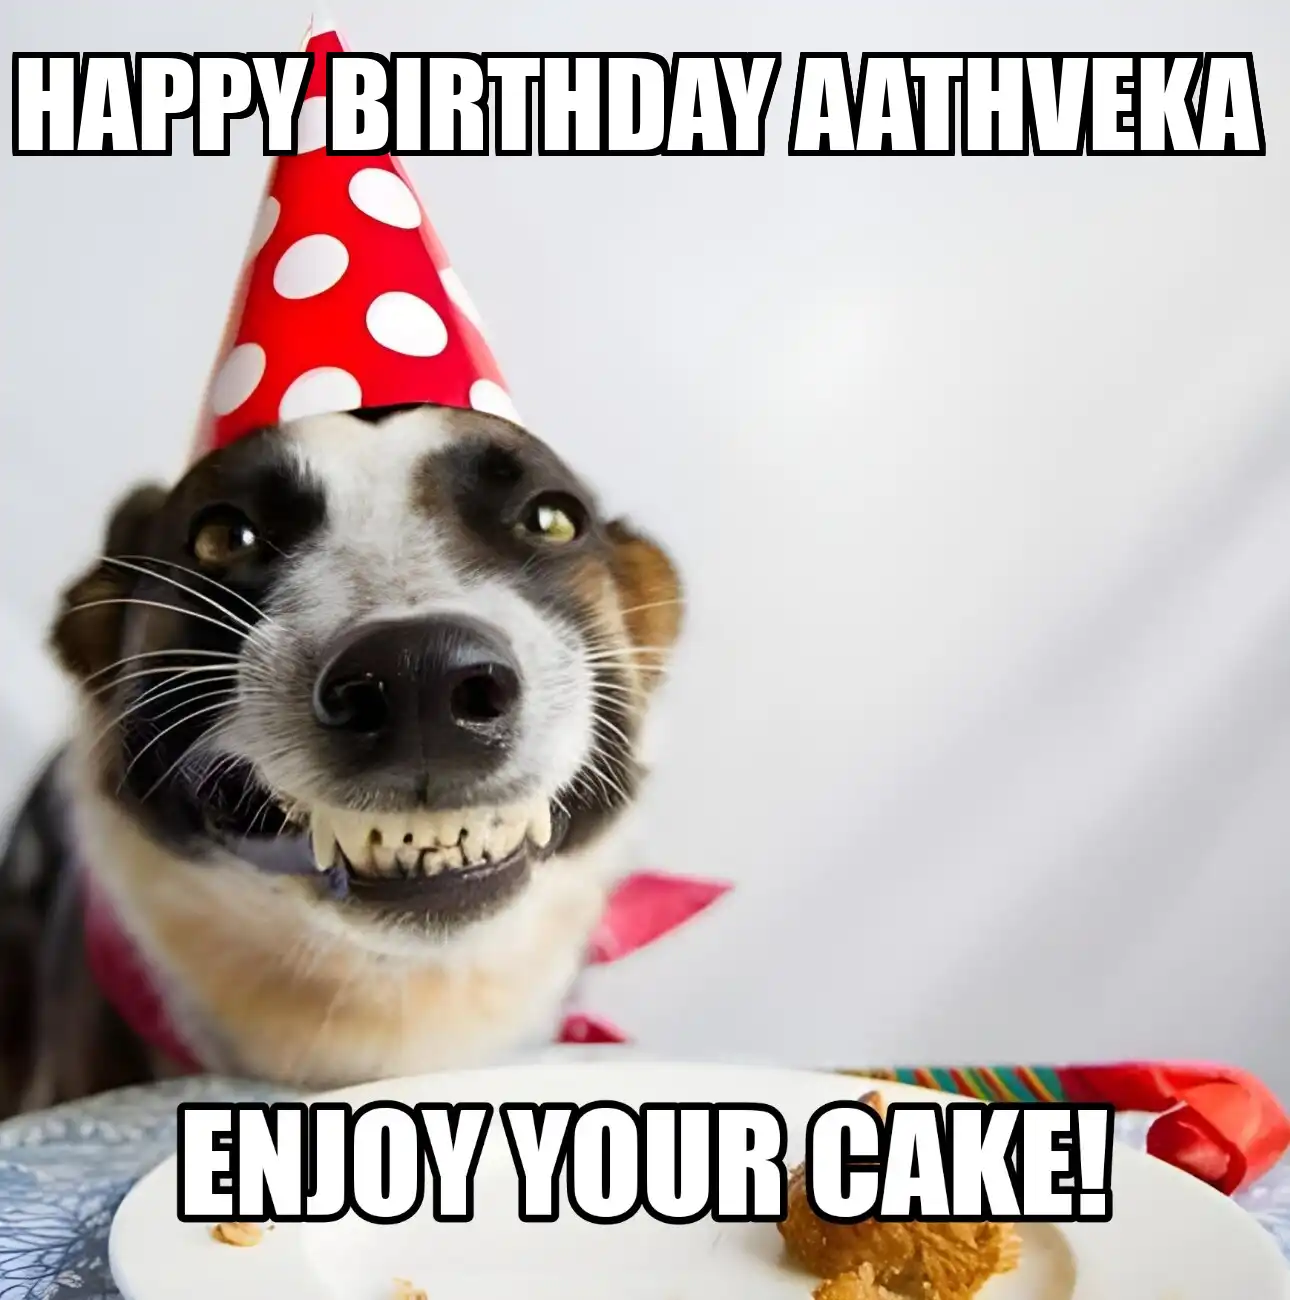 Happy Birthday Aathveka Enjoy Your Cake Dog Meme